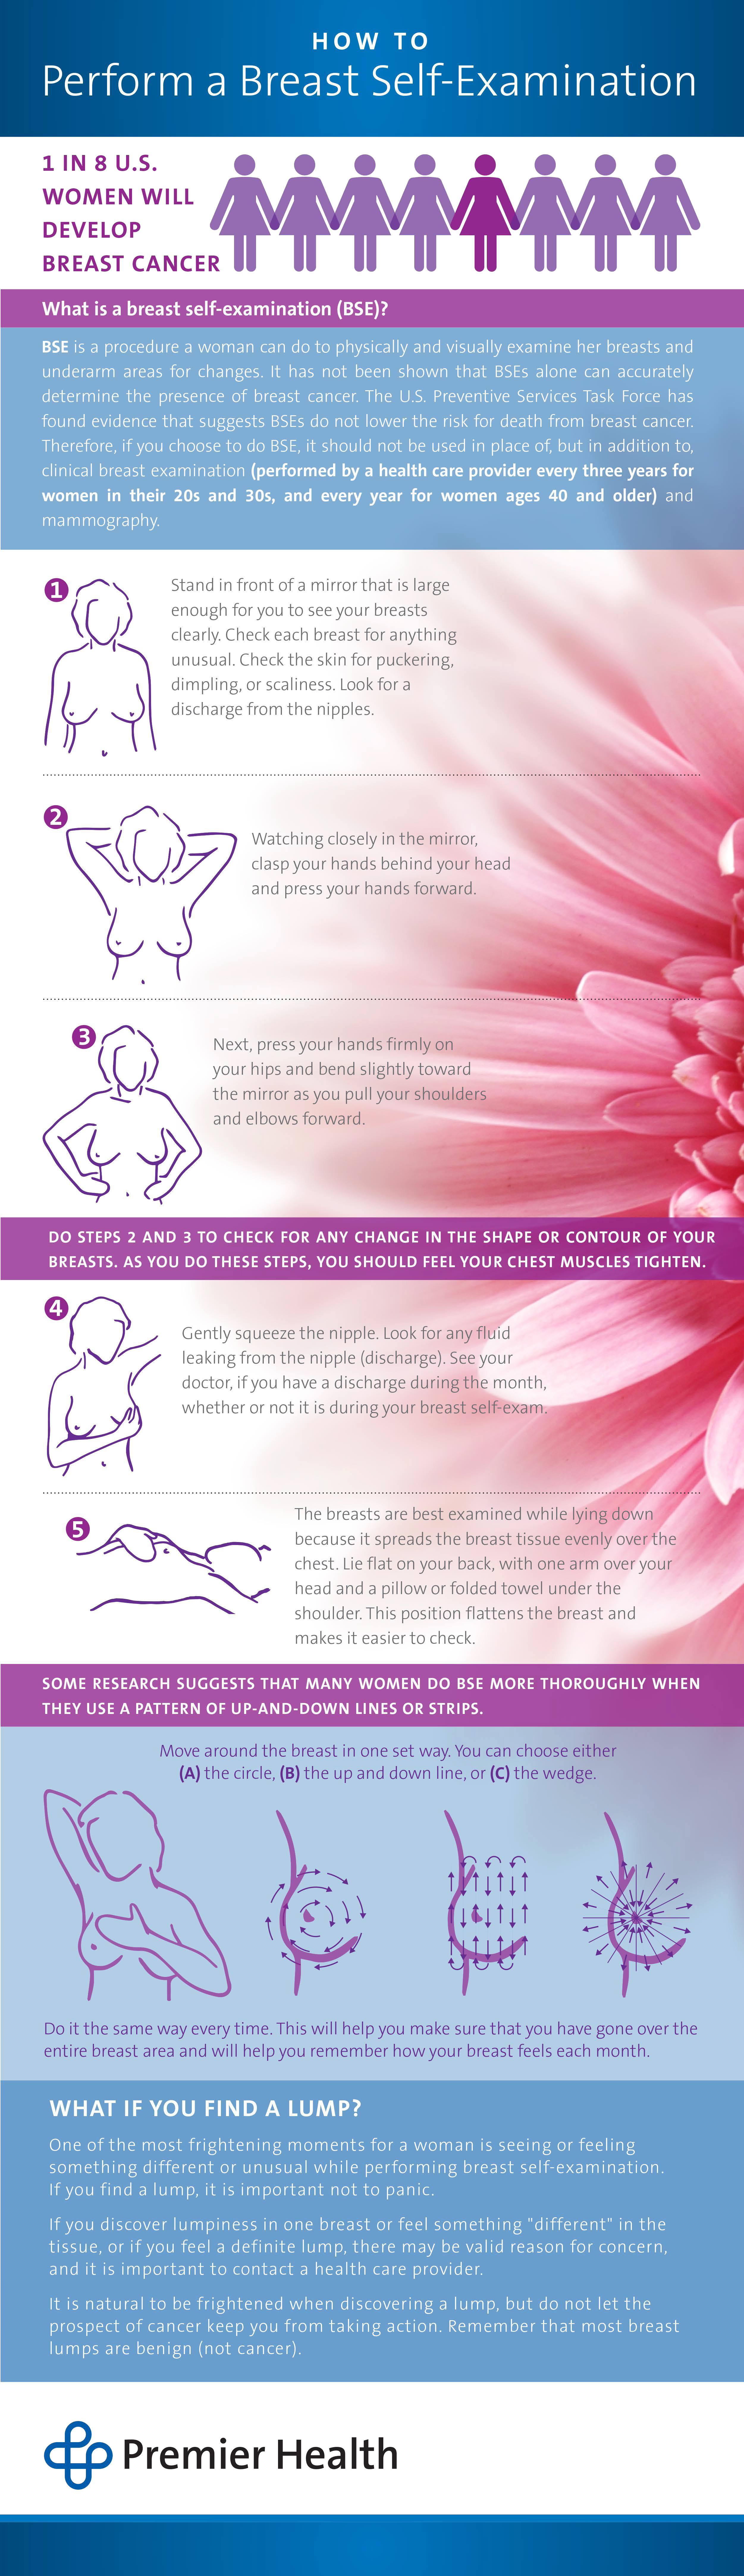 5 Easy Steps To Do a Breast Self-Exam